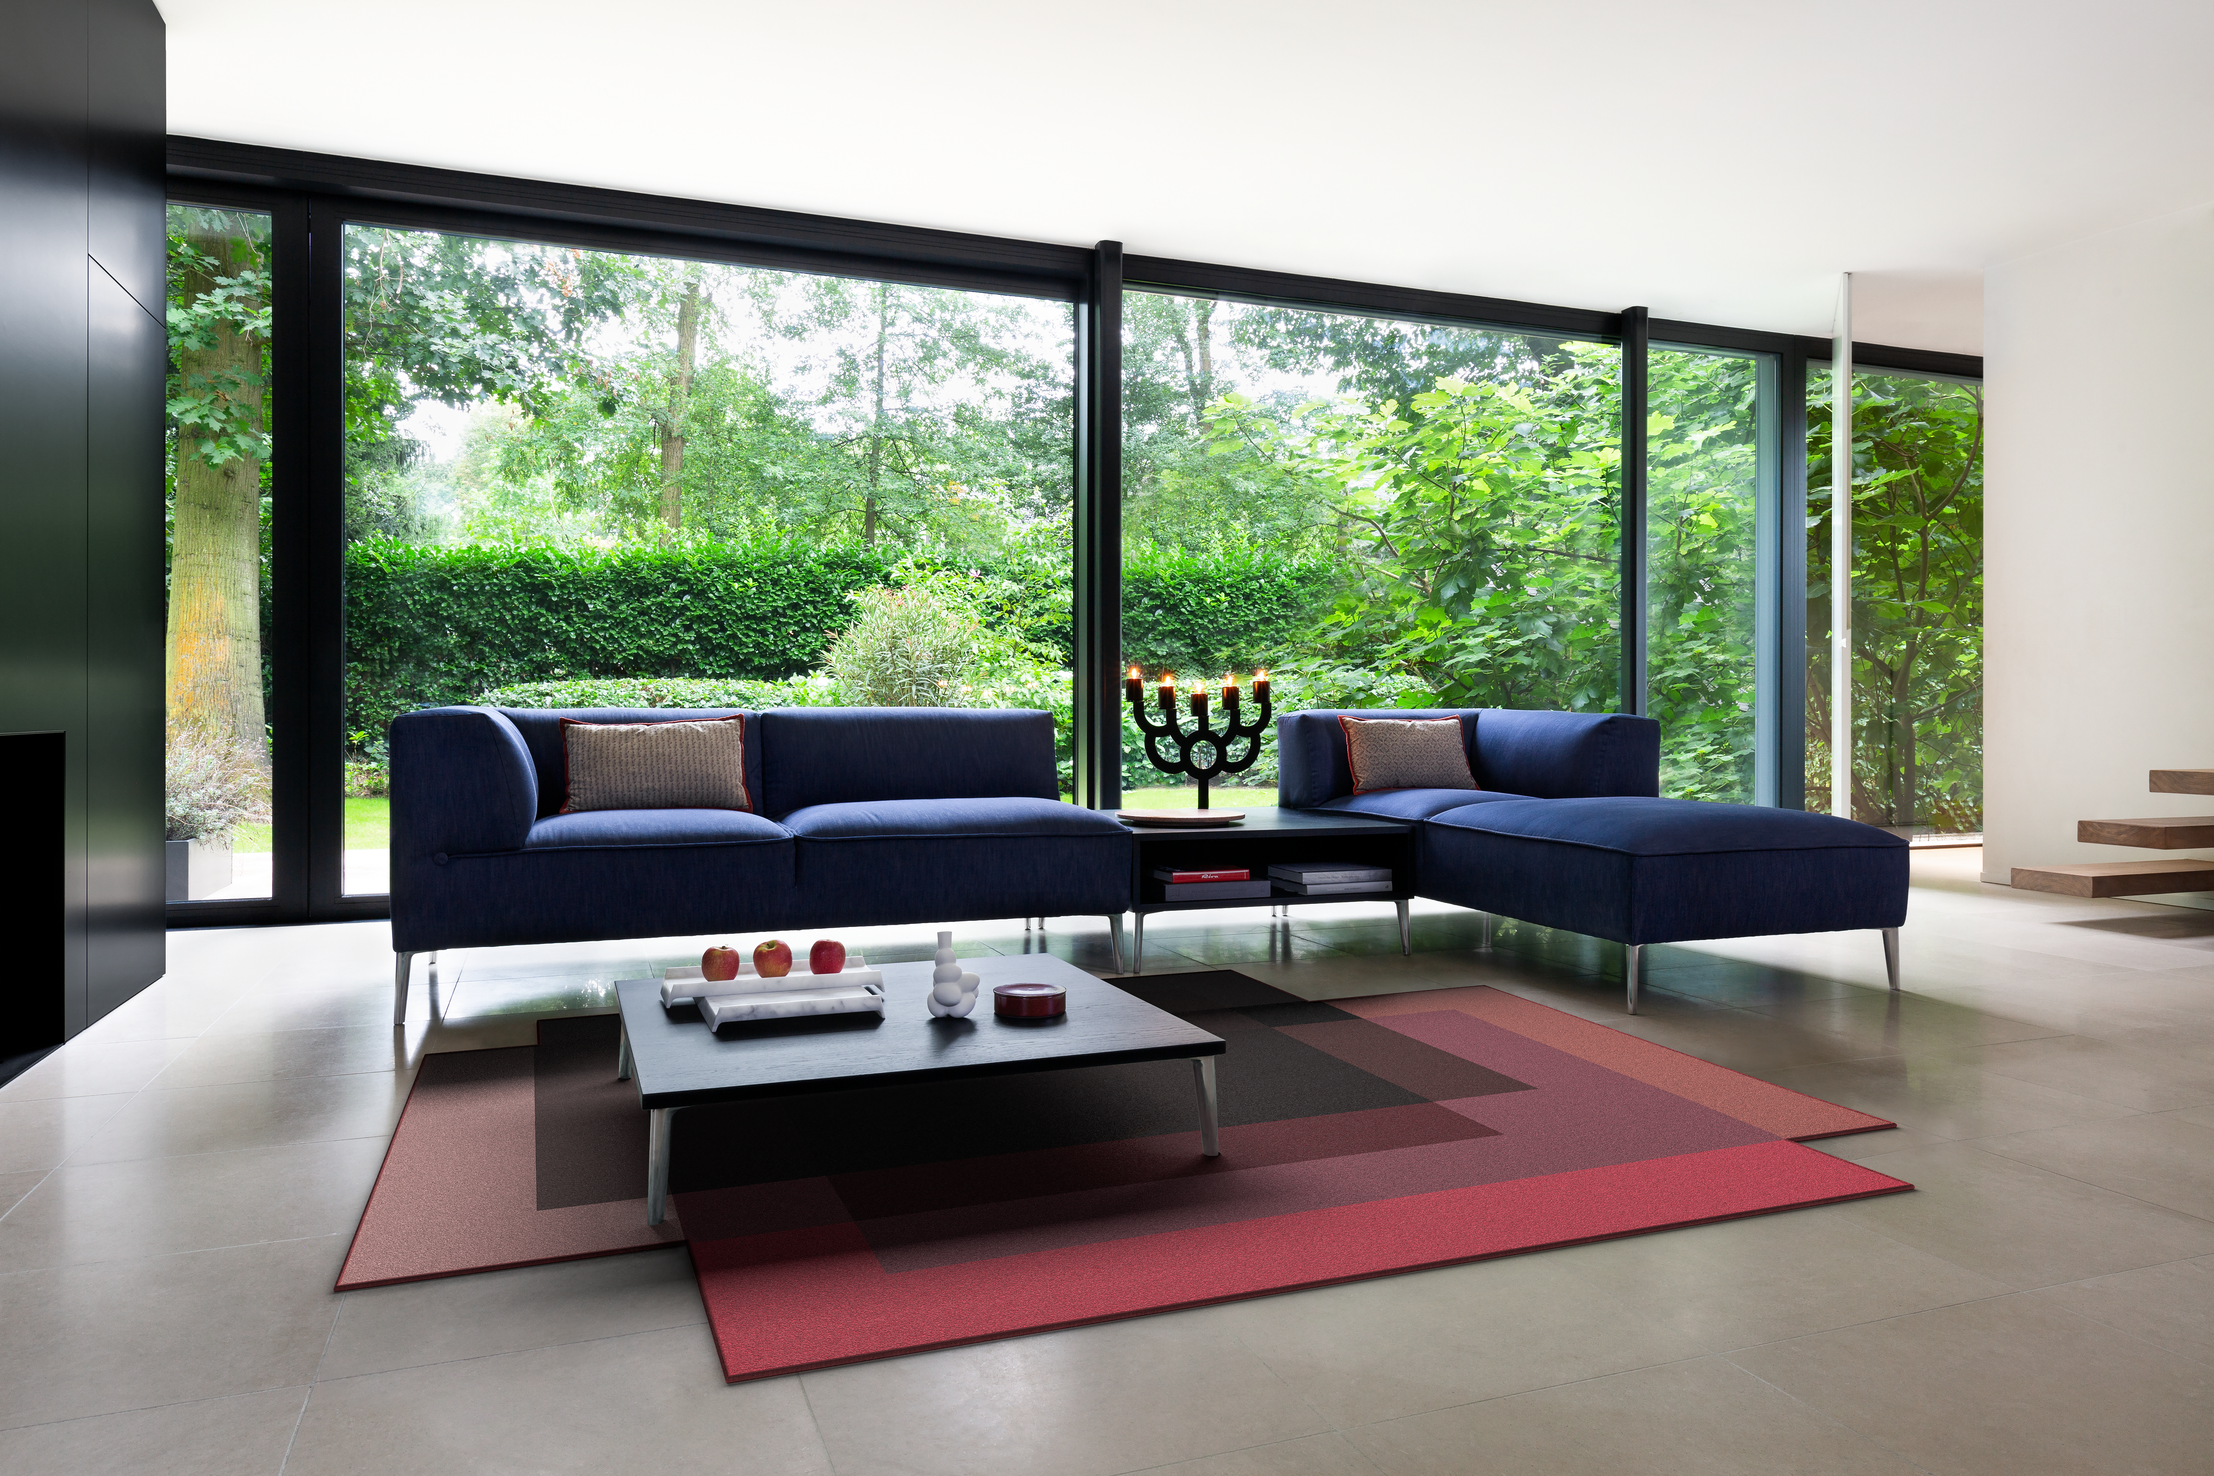 Sofa-so-good-in-applied-interior-setting